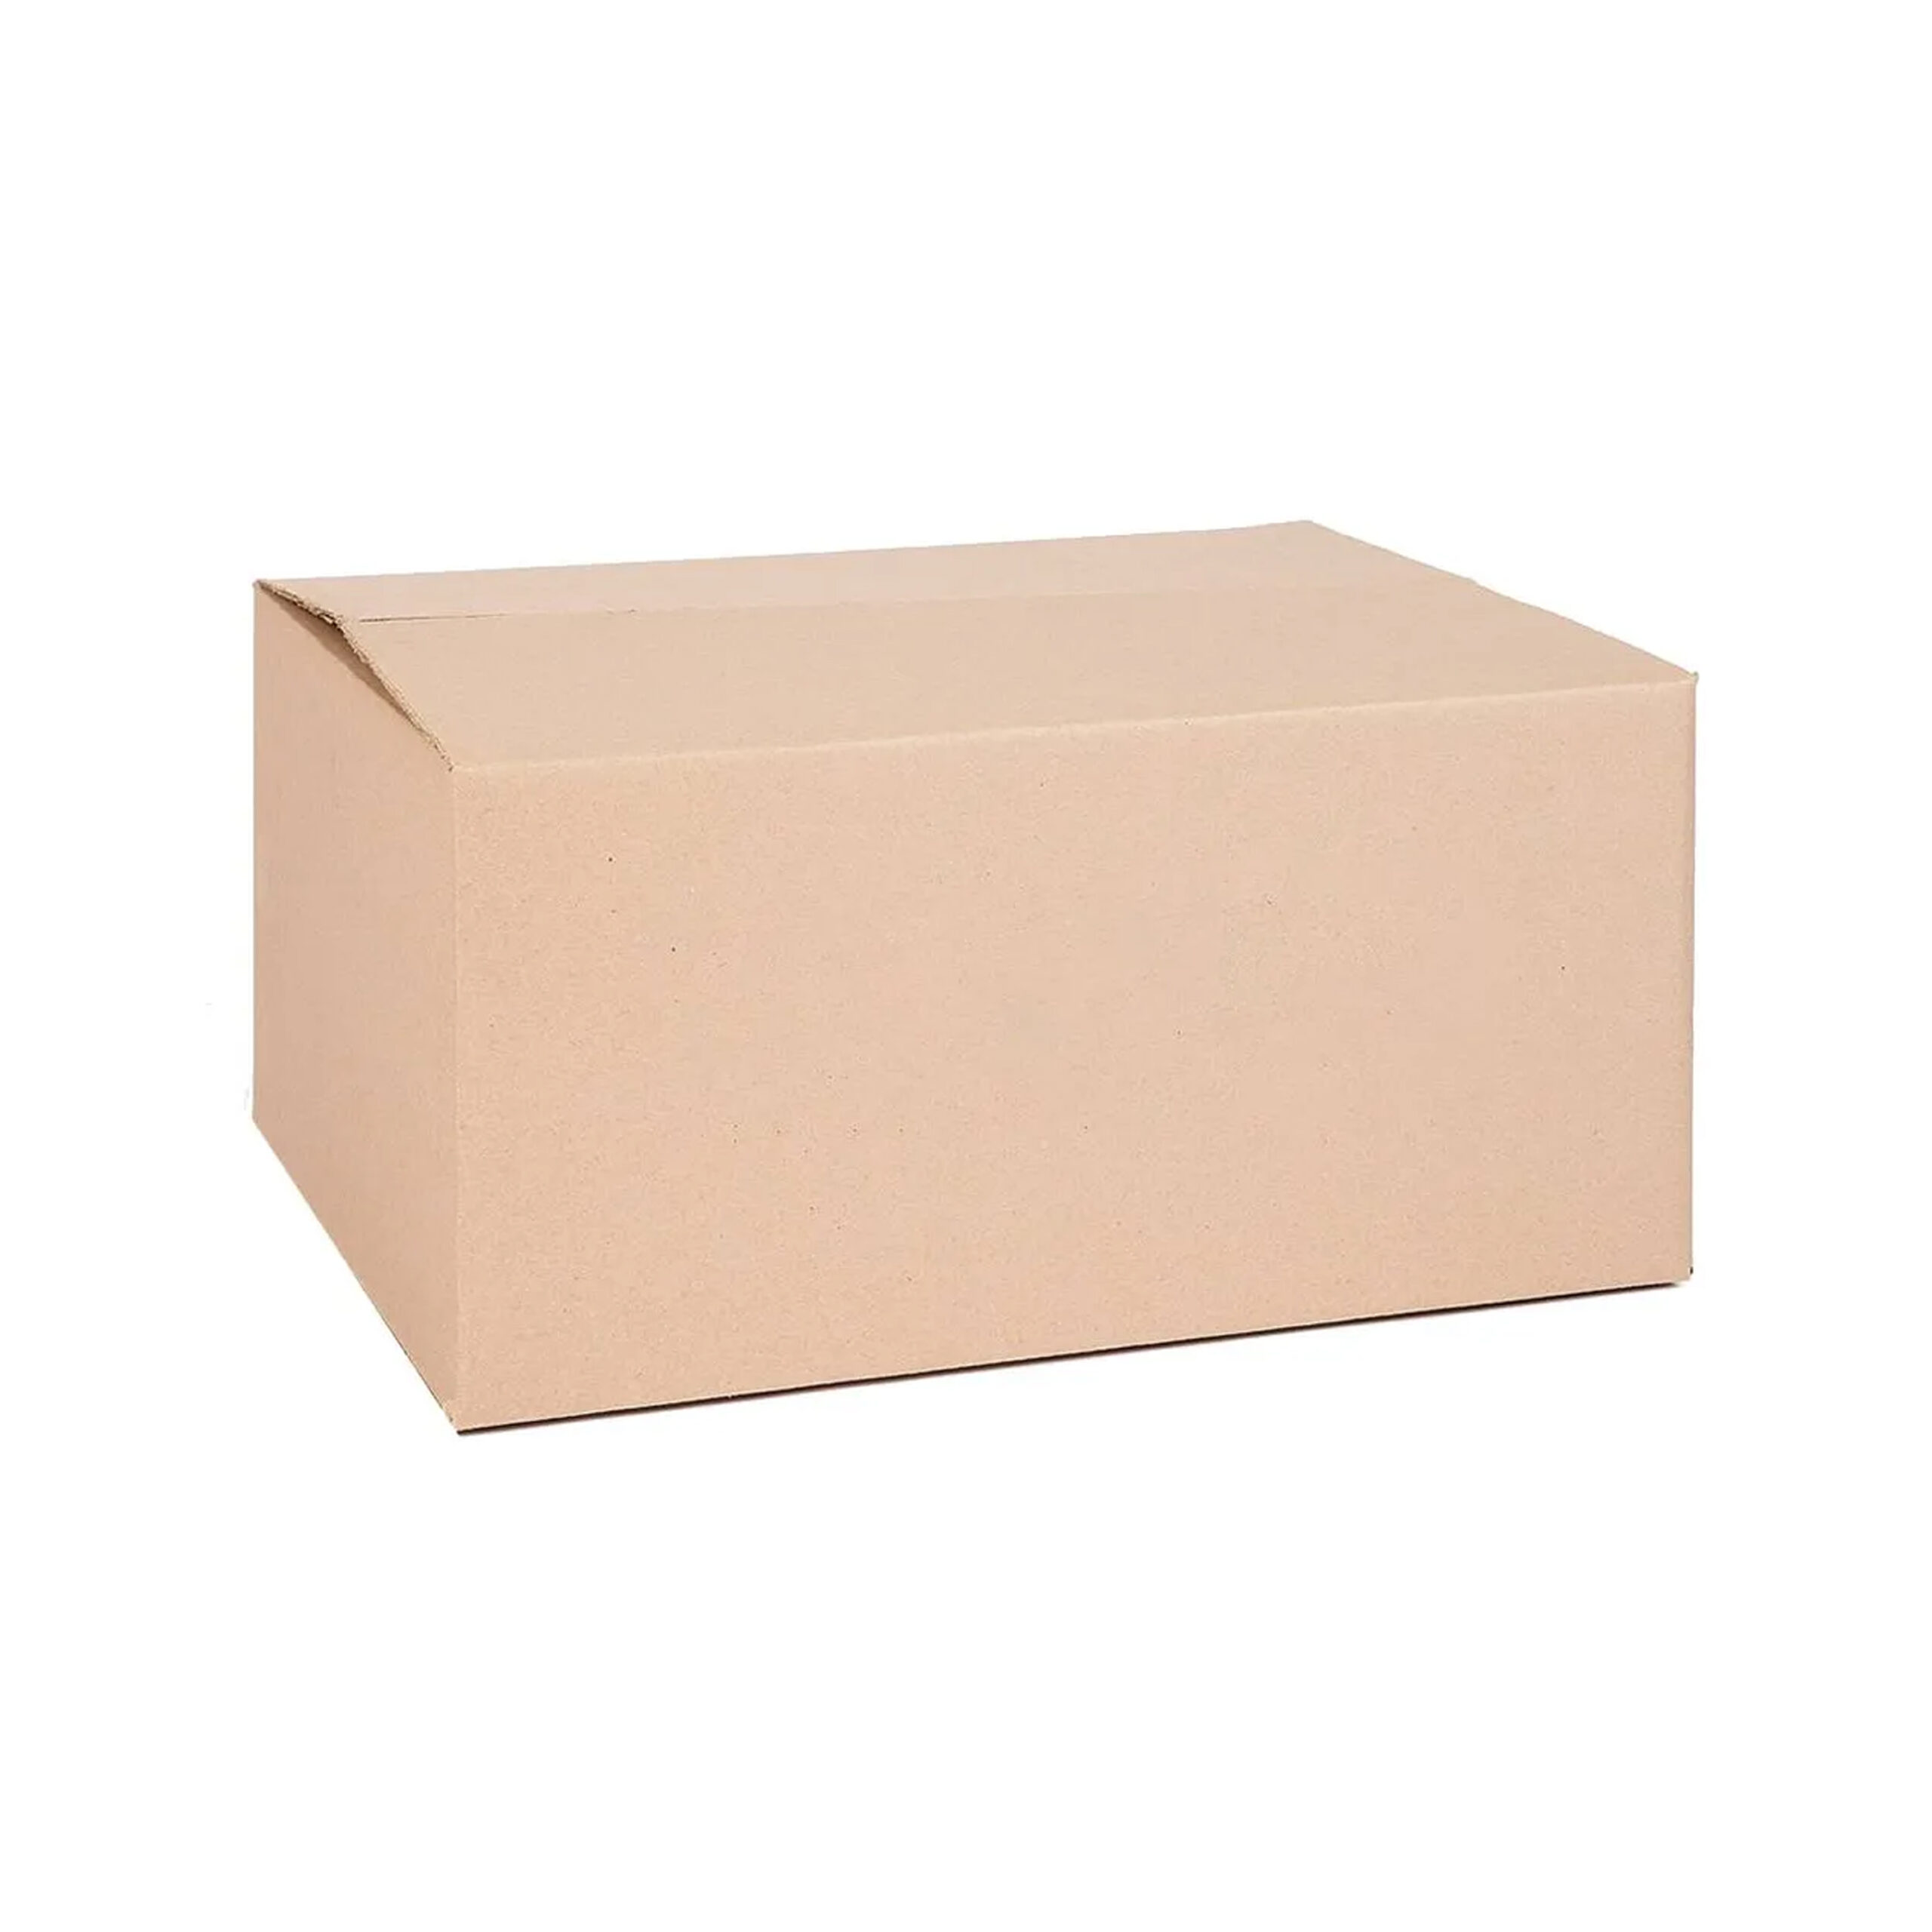 CORRUGATED BOX
#24C 285x215x125